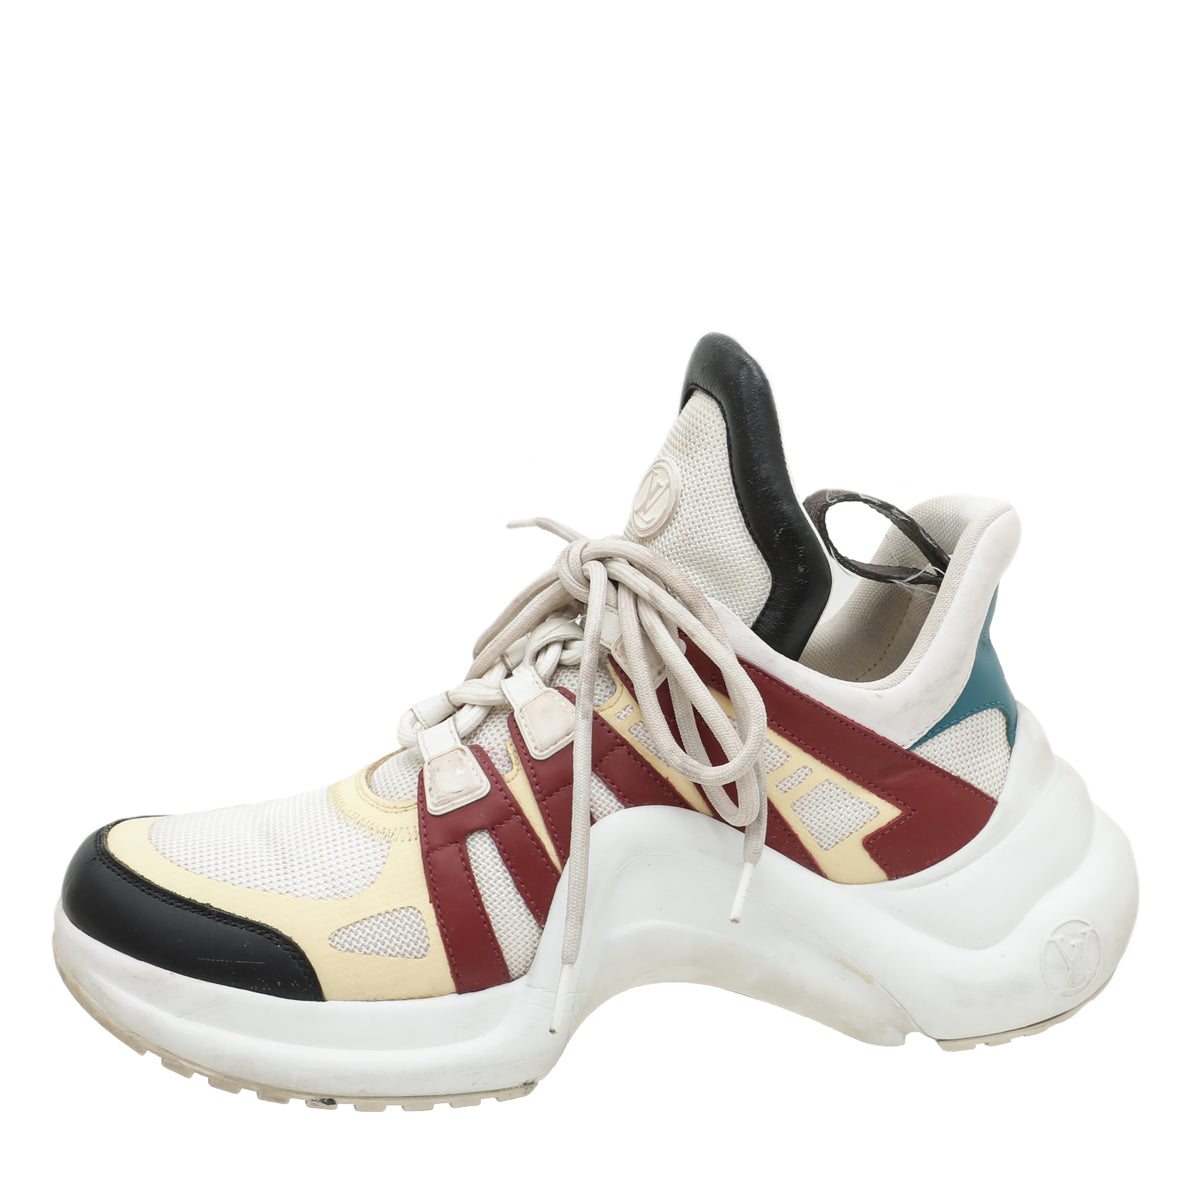 Louis Vuitton Multicolor Archlight Trainer Sneakers 39